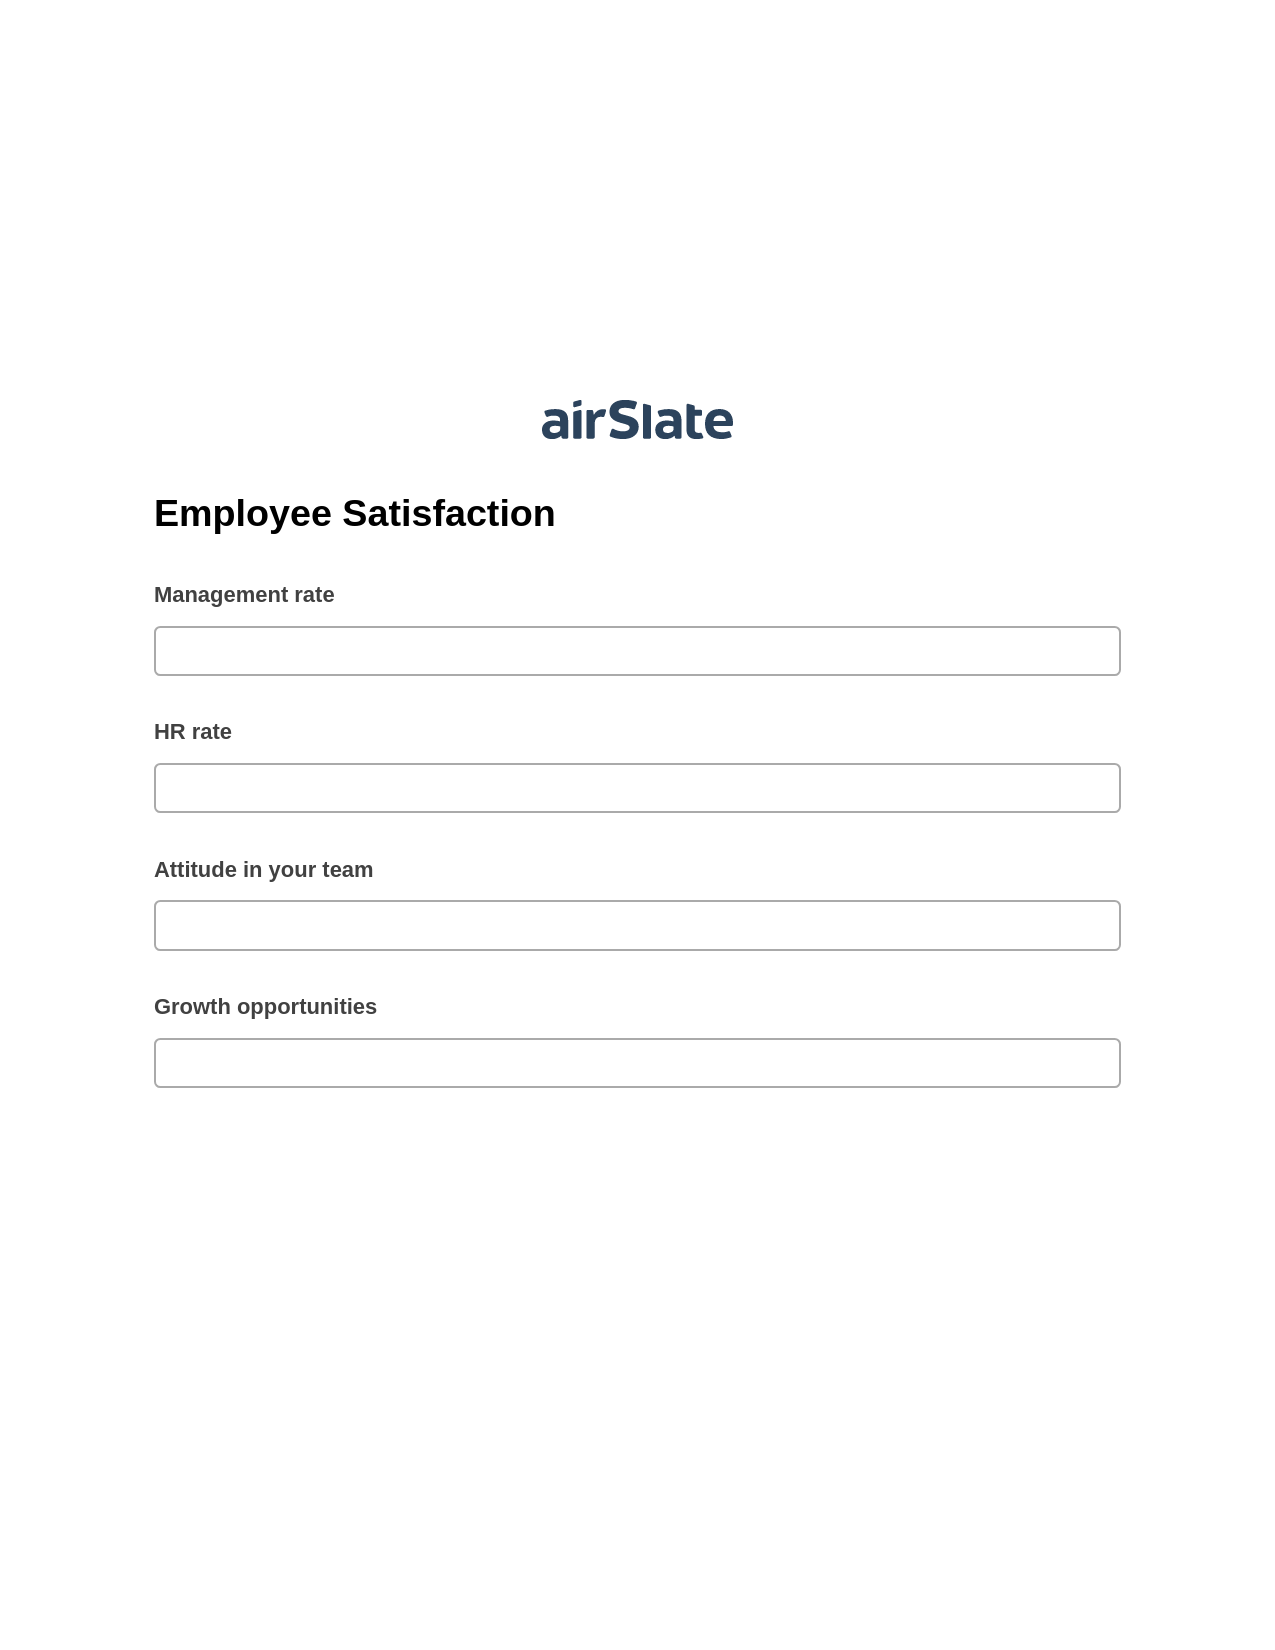 Employee Satisfaction Pre-fill Document Bot, Webhook Bot, Box Bot